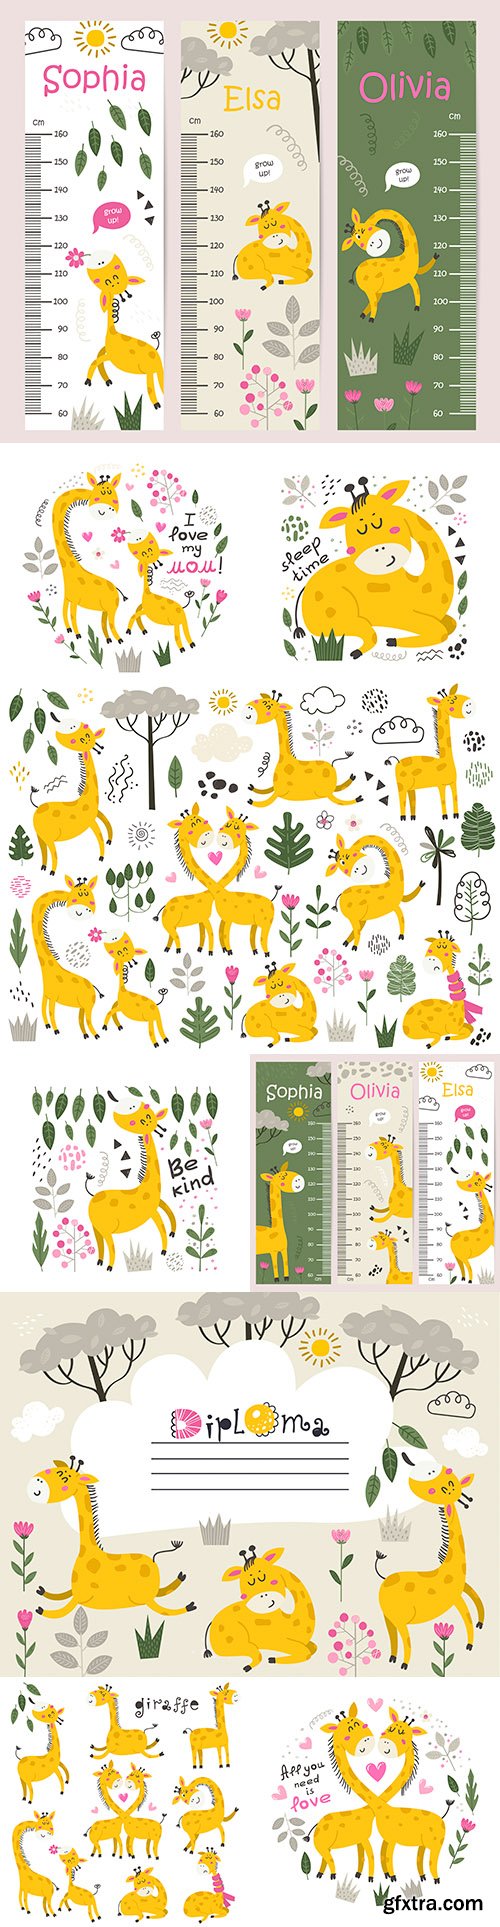 Cute painted giraffe and children 's growth chart design
